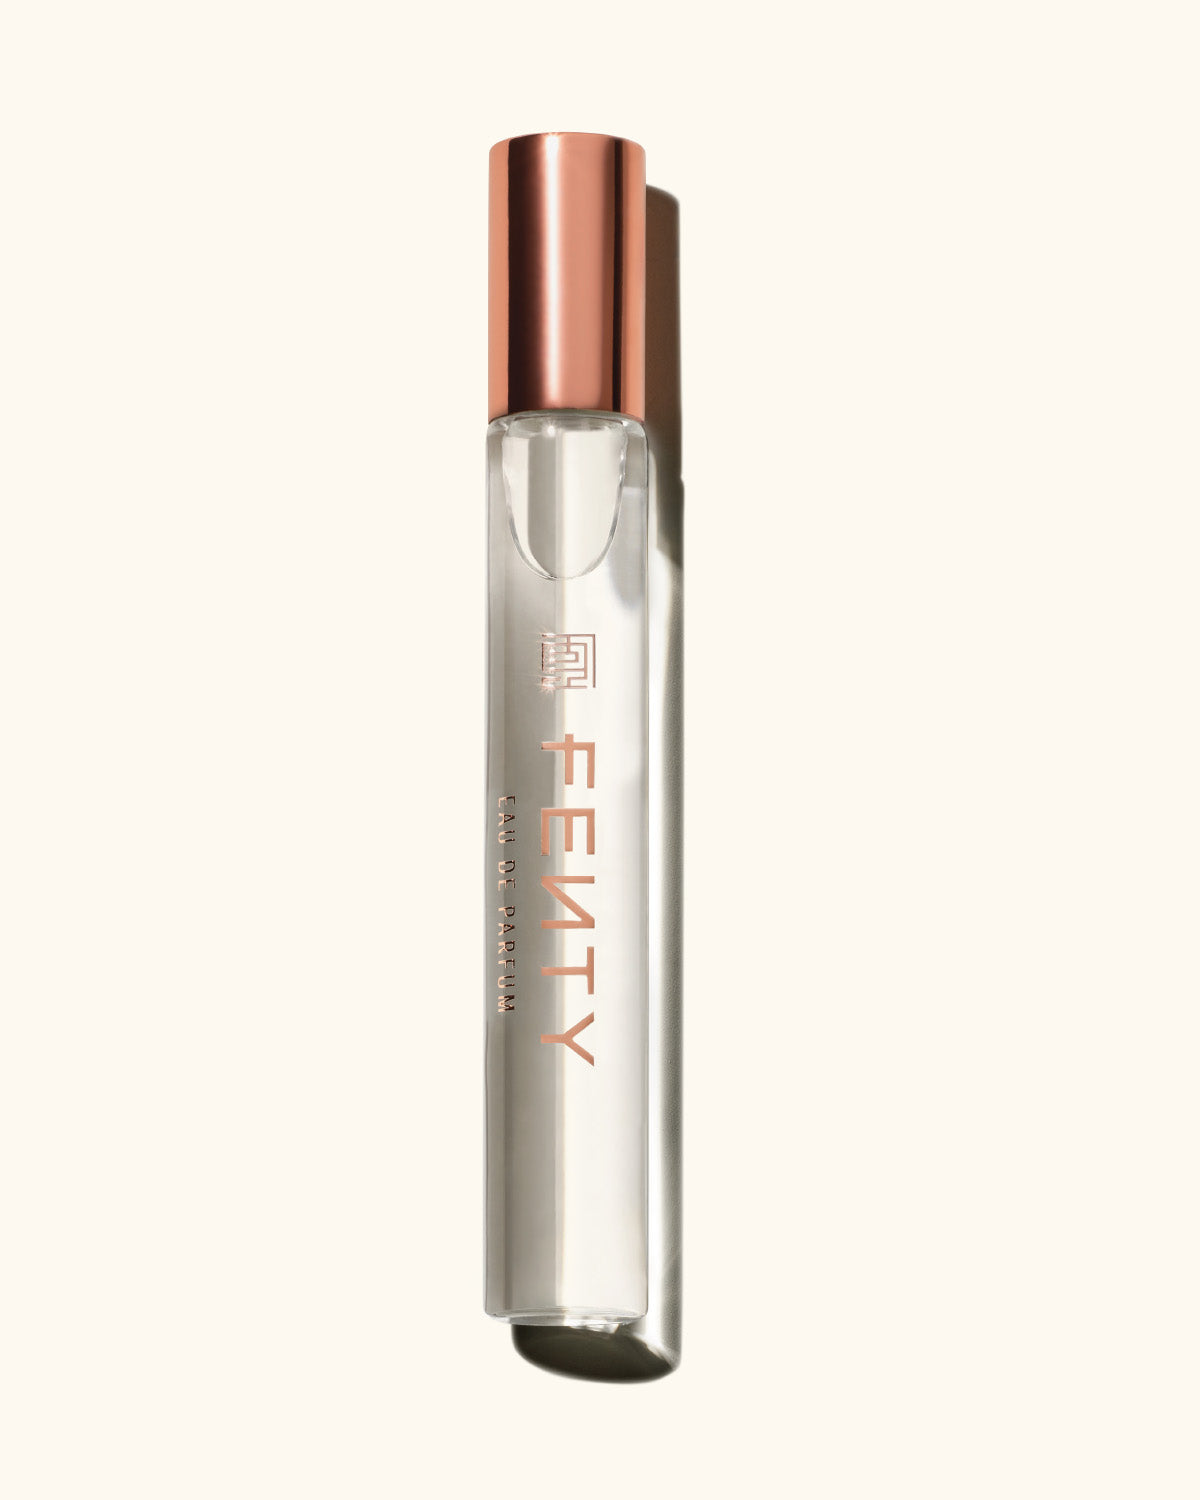 Fenty Eau de Parfum Travel Spray, by Rihanna